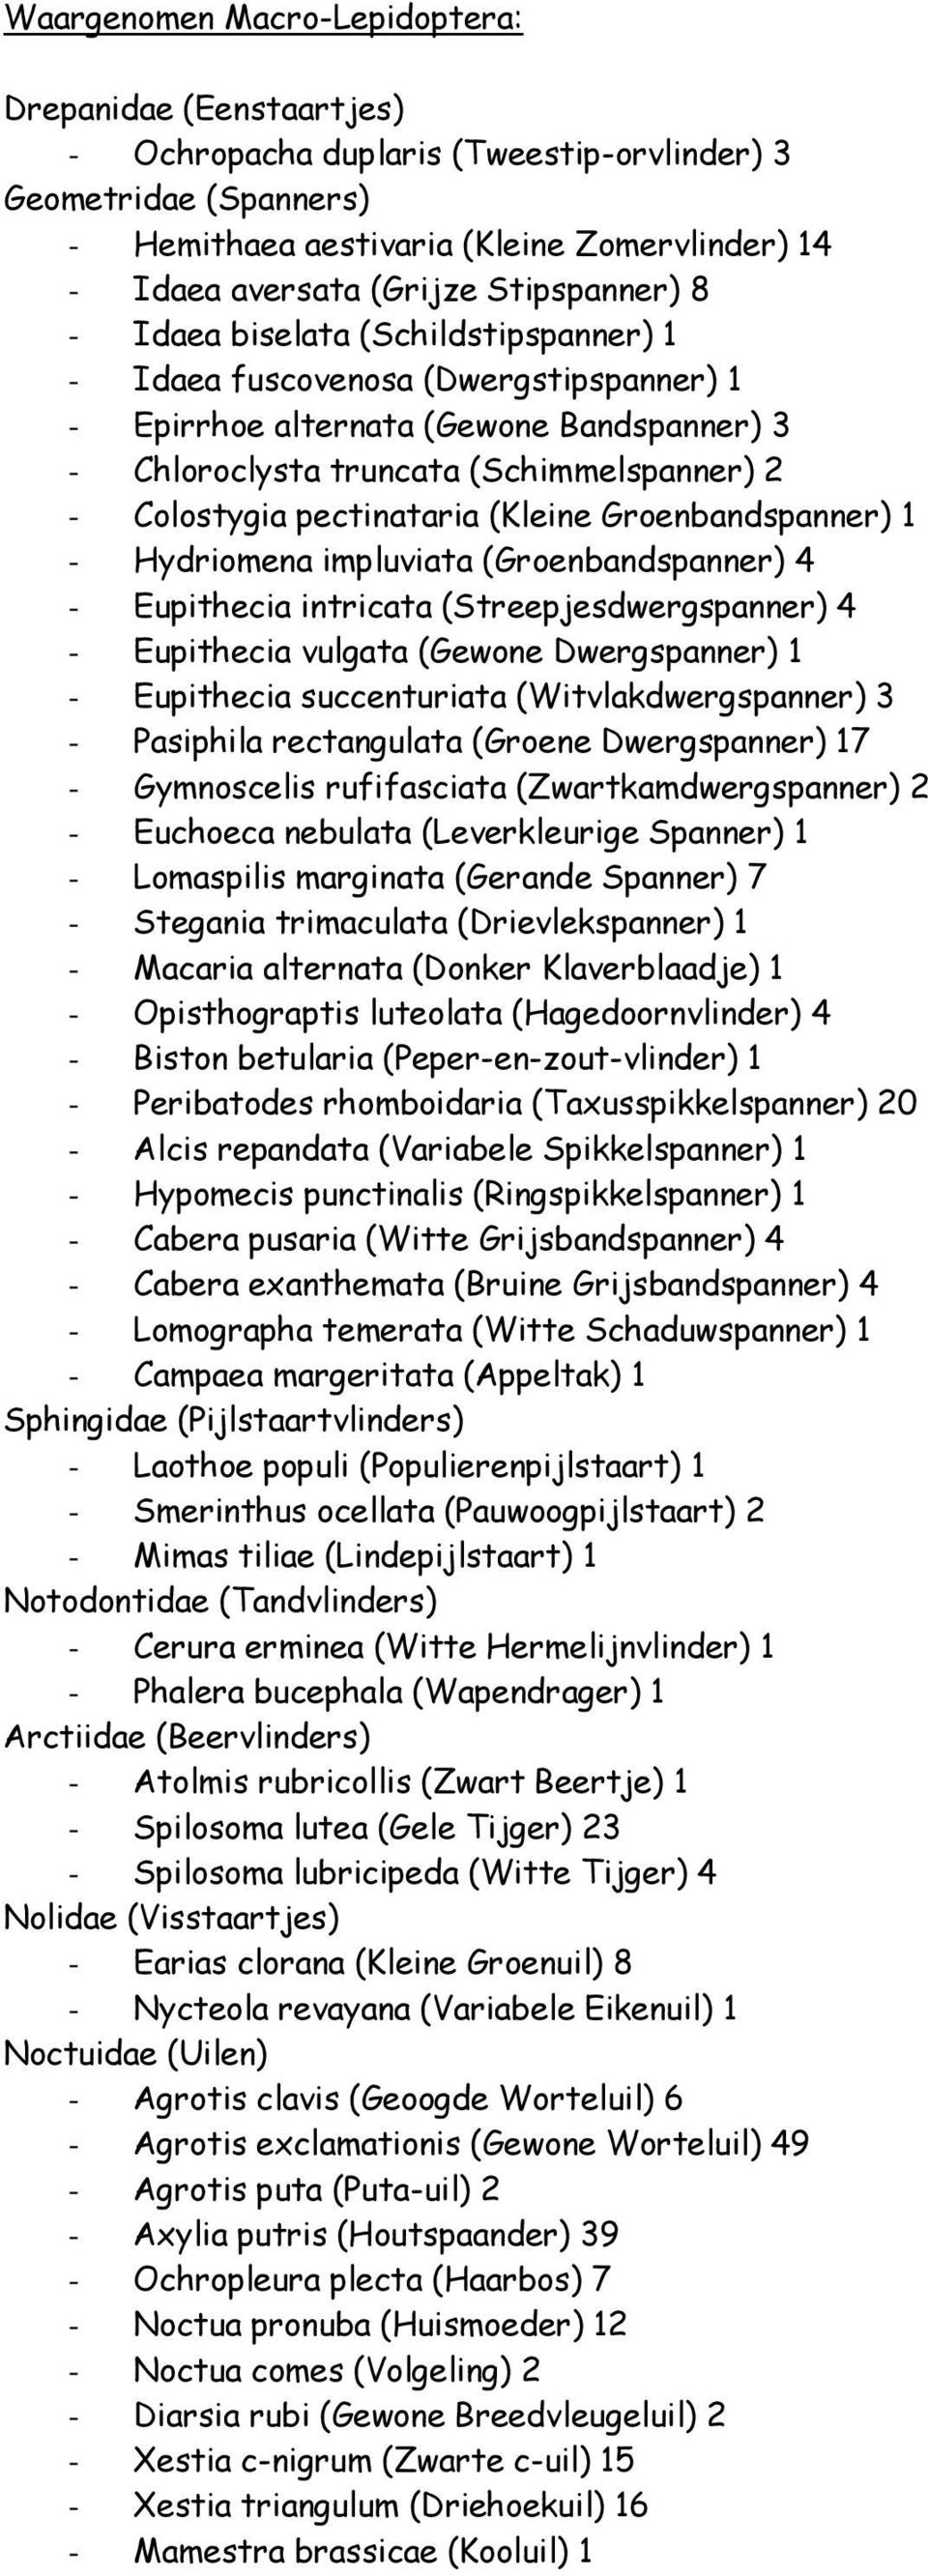 pectinataria (Kleine Groenbandspanner) 1 - Hydriomena impluviata (Groenbandspanner) 4 - Eupithecia intricata (Streepjesdwergspanner) 4 - Eupithecia vulgata (Gewone Dwergspanner) 1 - Eupithecia